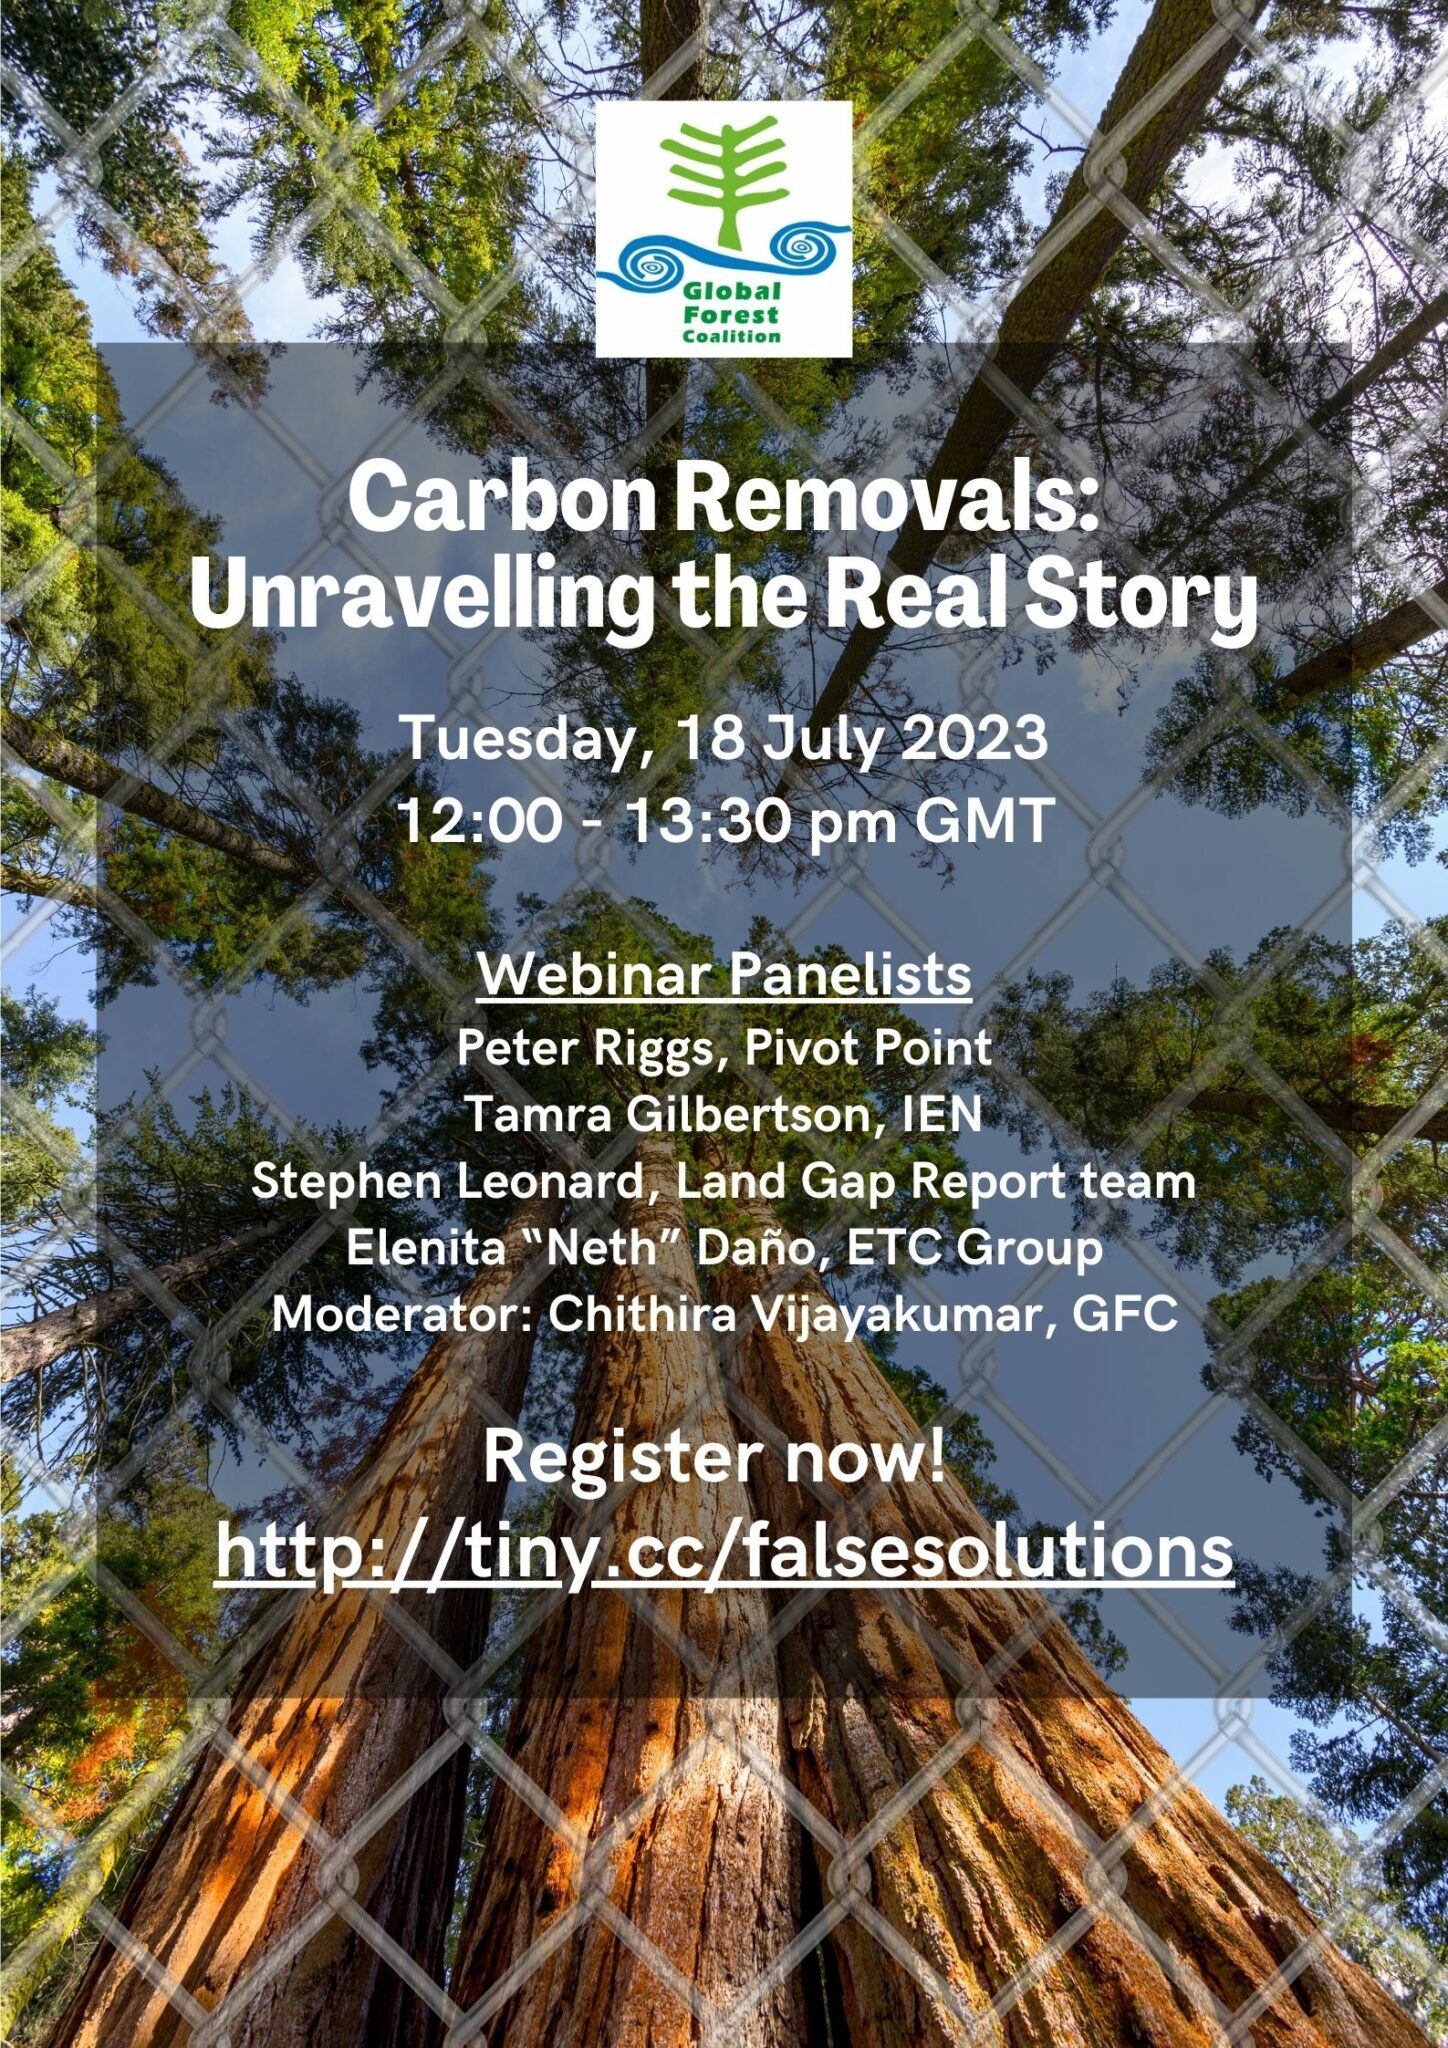 Global Forest Coalition Webinar on Carbon Removals: Unravelling